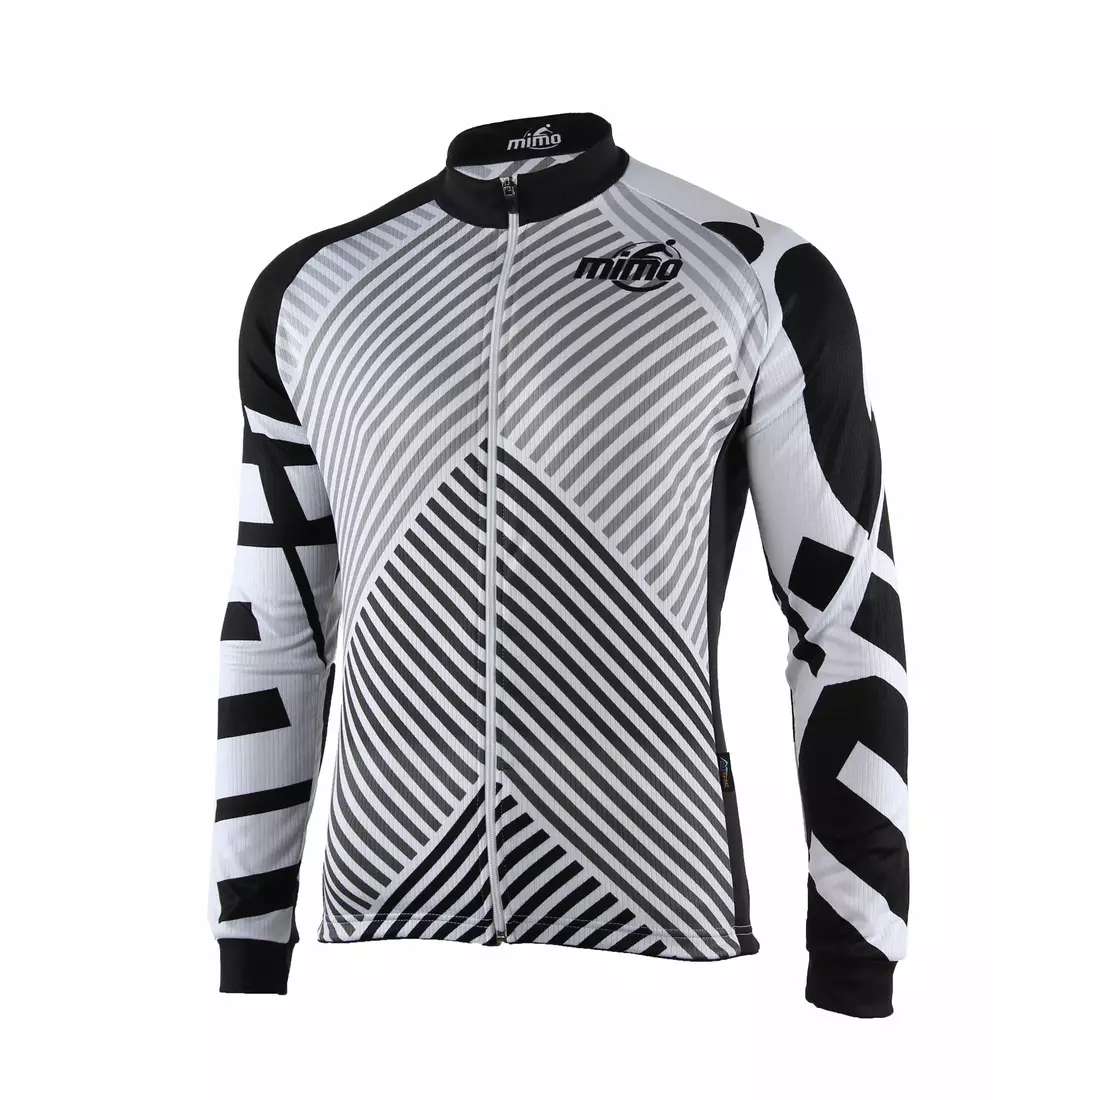 MikeSPORT DESIGN STROKES men's cycling sweatshirt